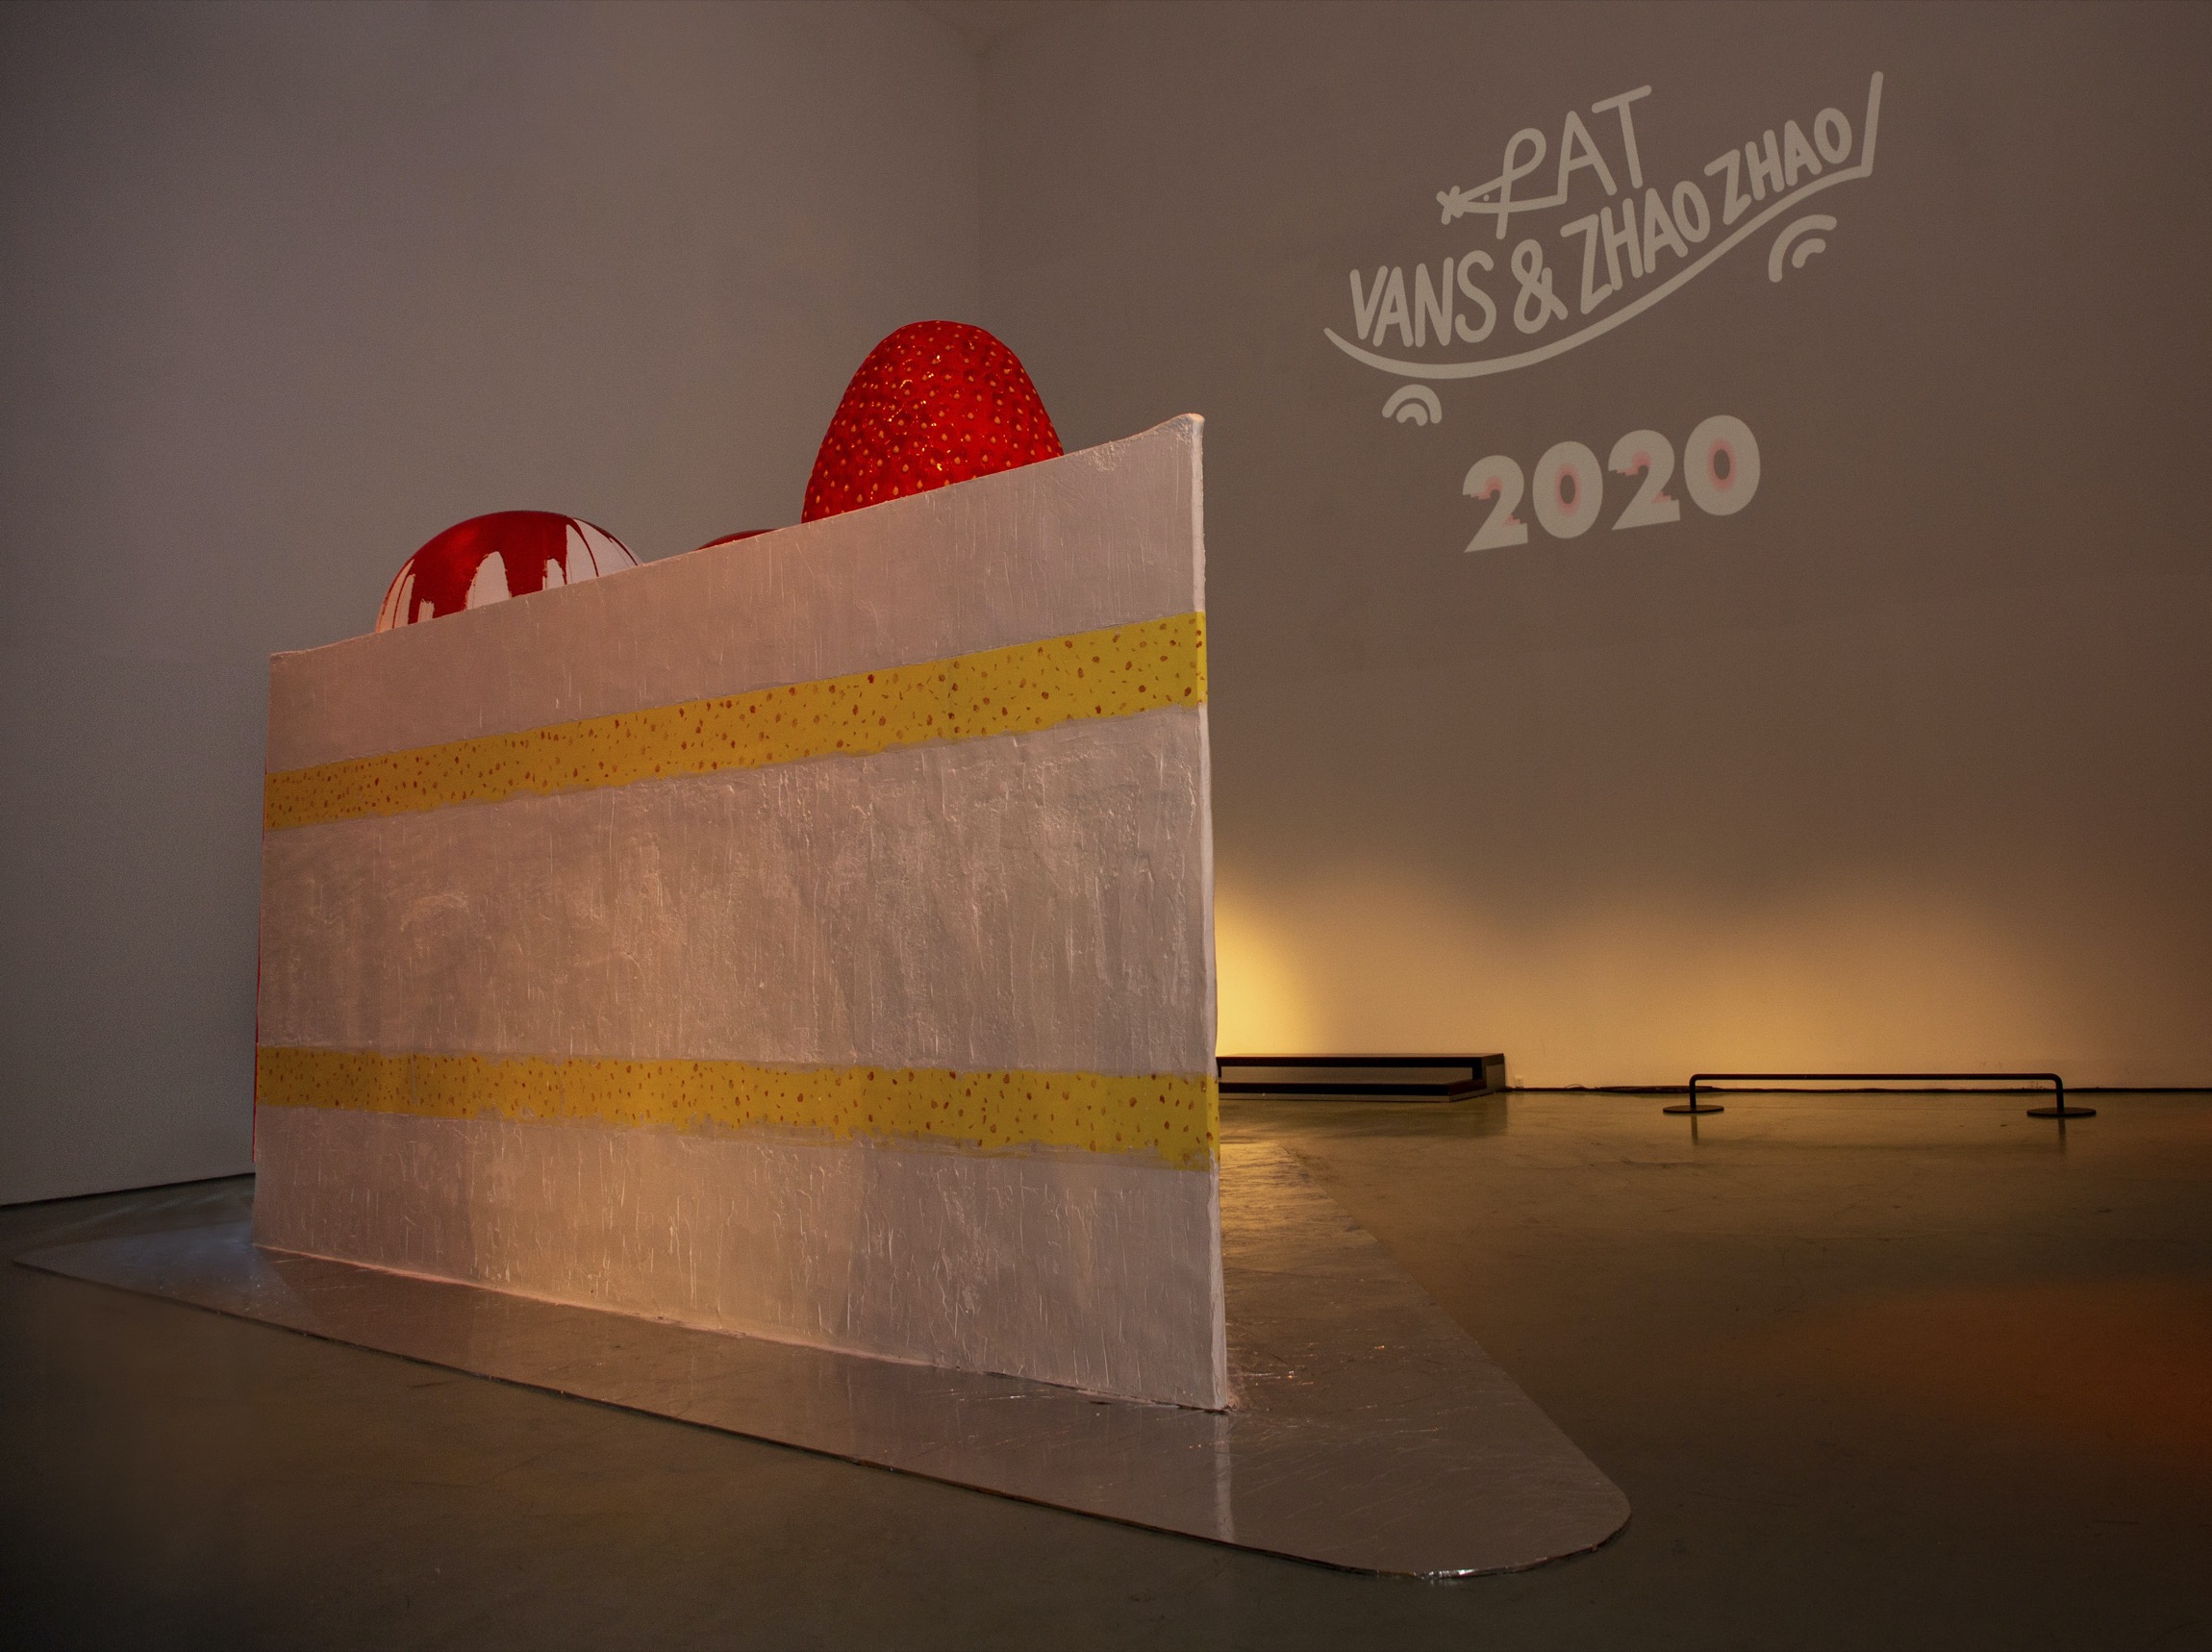 VANS 2020鼠年系列联名特展登陆北京 VANS携手艺术家赵赵鼓励多元视角 创意自我表达